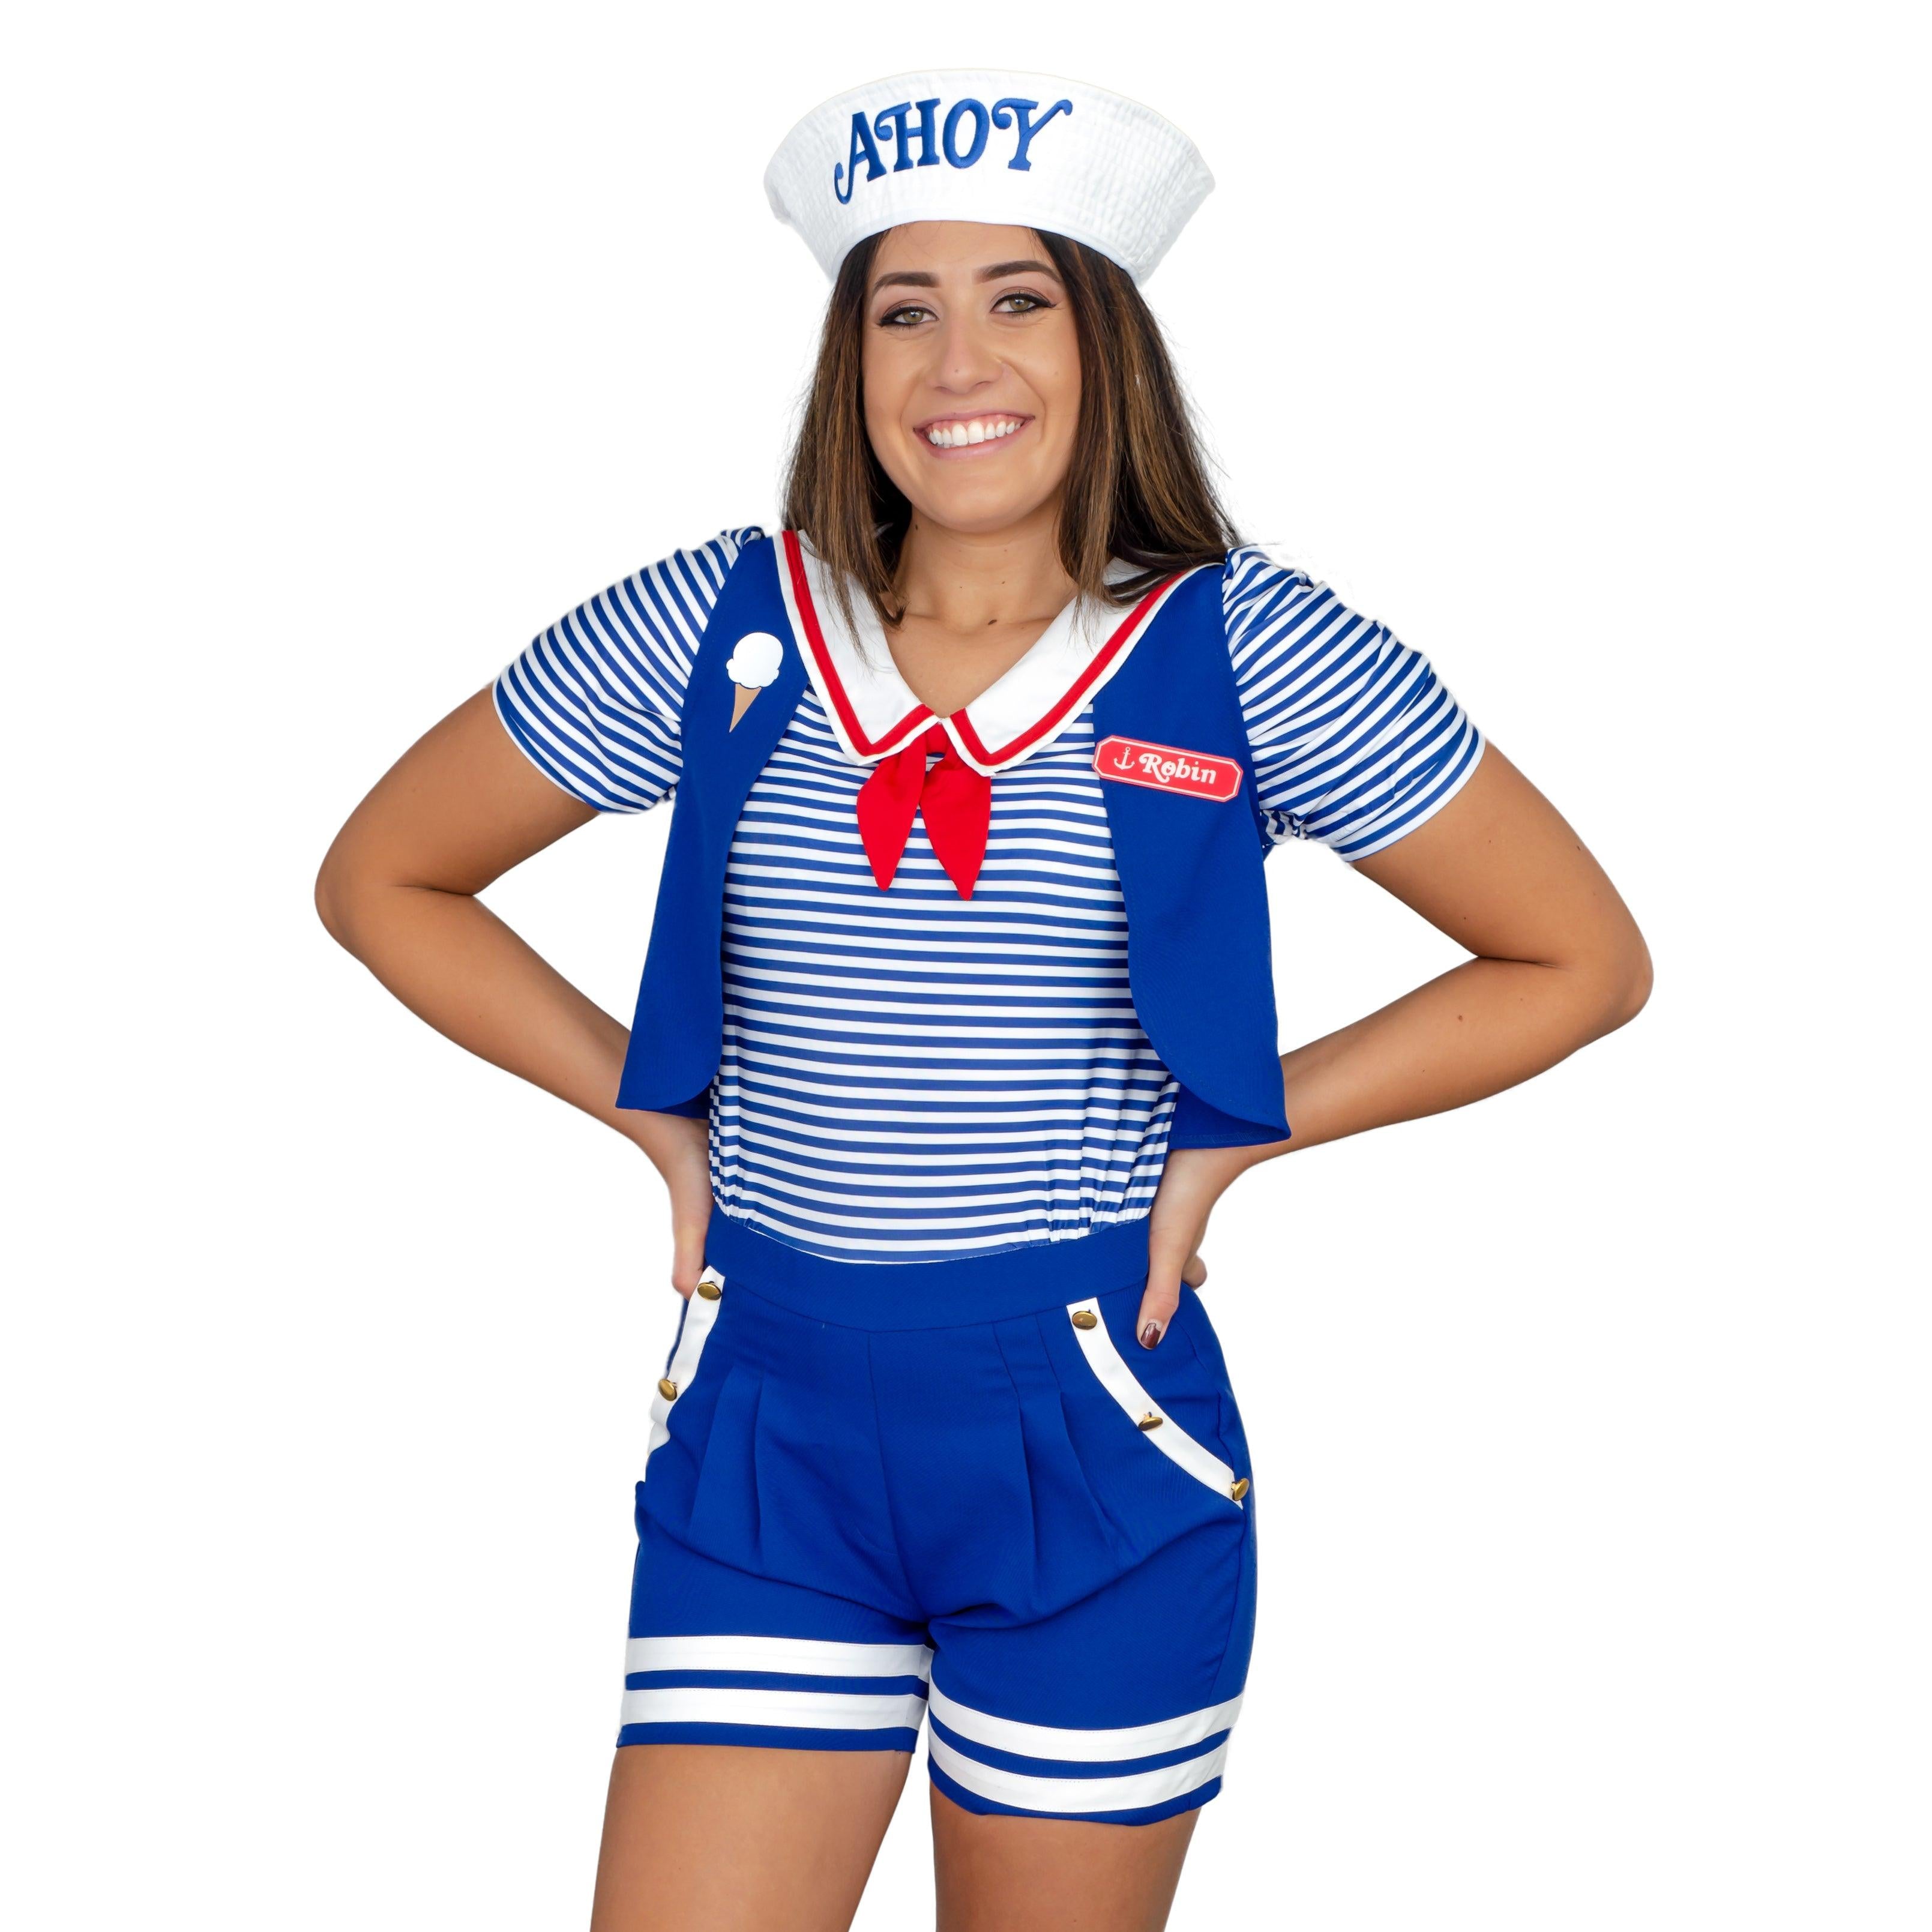 Robin Ahoy Sailor Halloween Costume Cosplay Set - TVStoreOnline